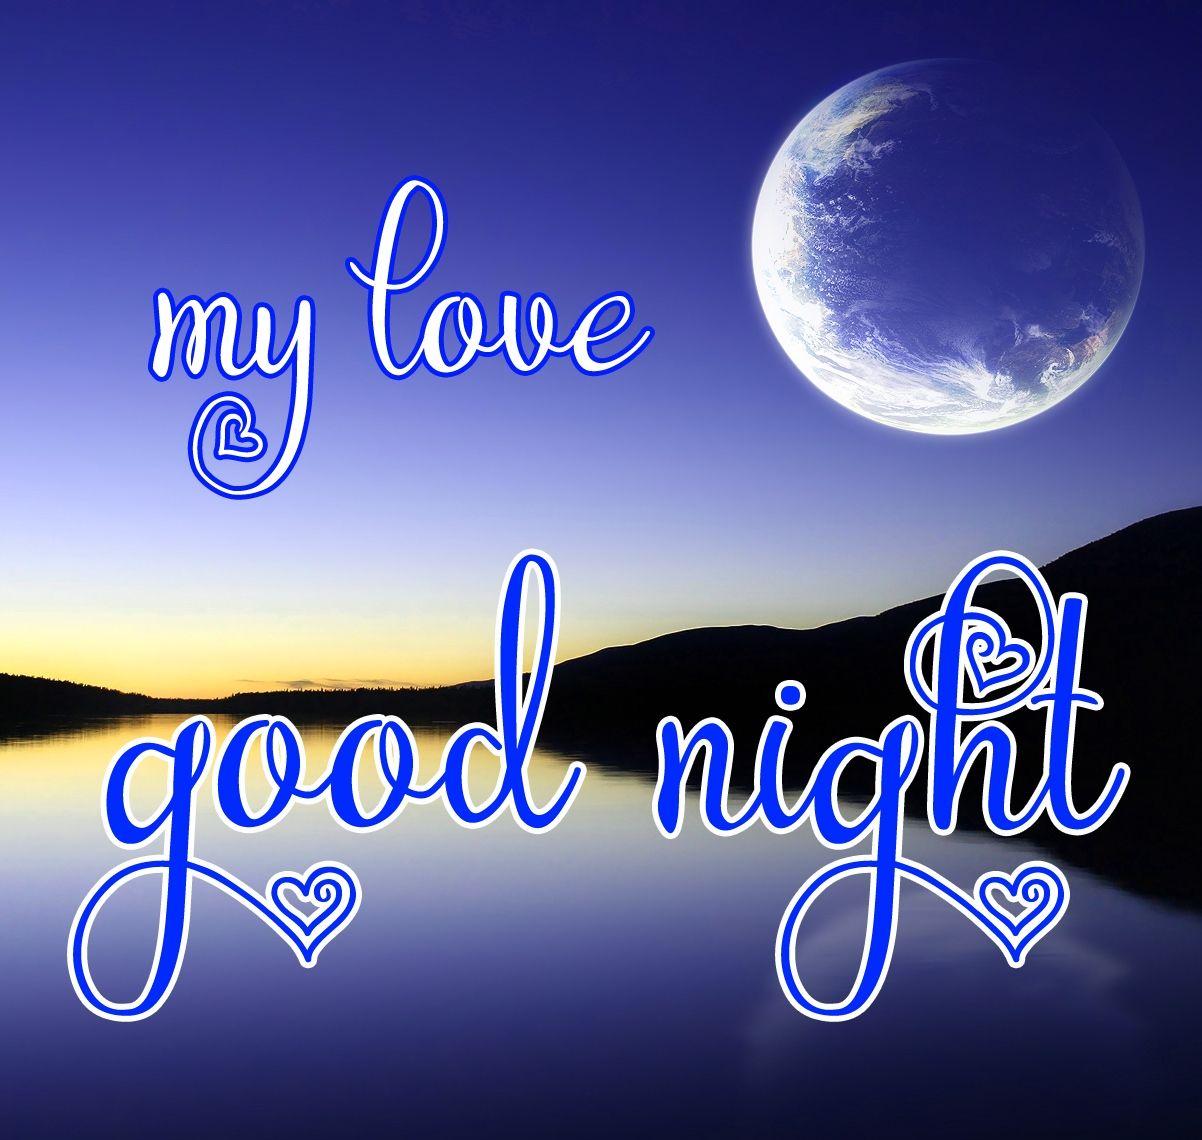 New Good Night Wallpaper Photo Download – GoodNightImge